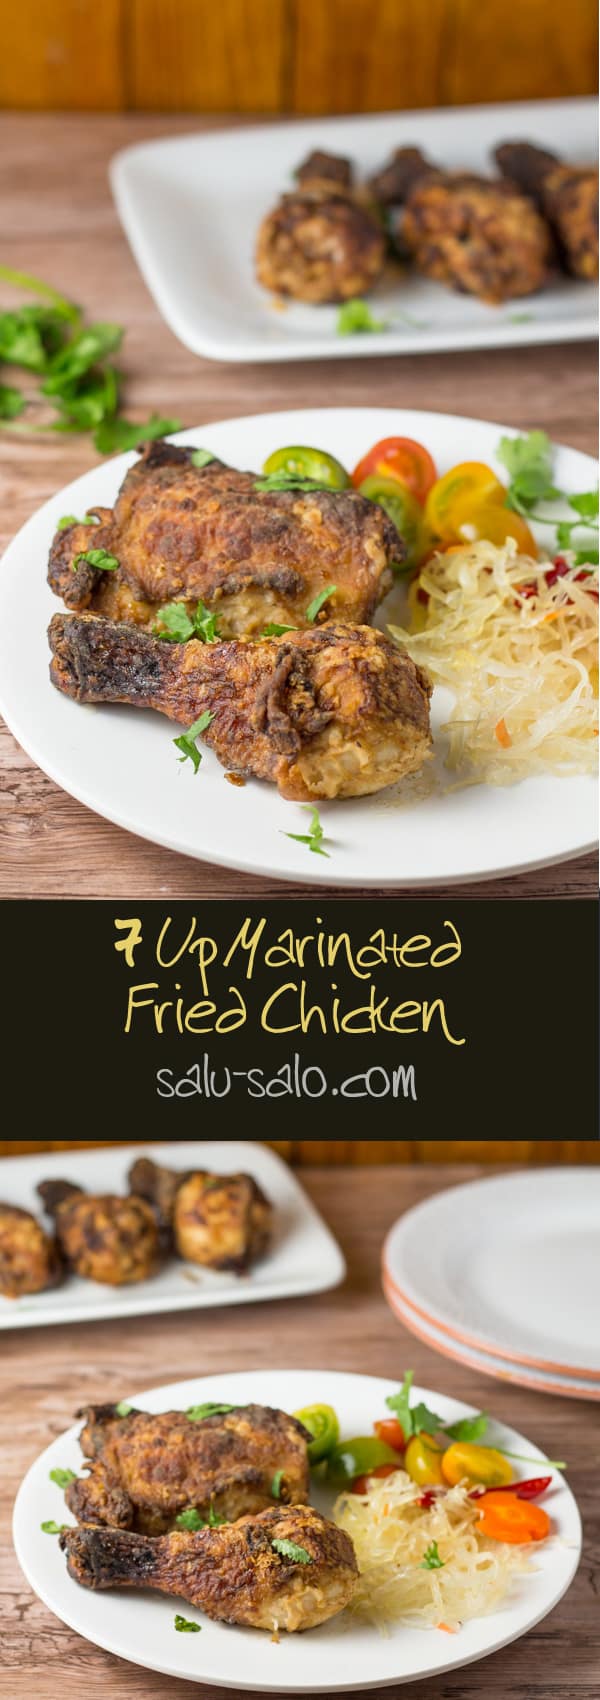 7 Up Marinated Fried Chicken